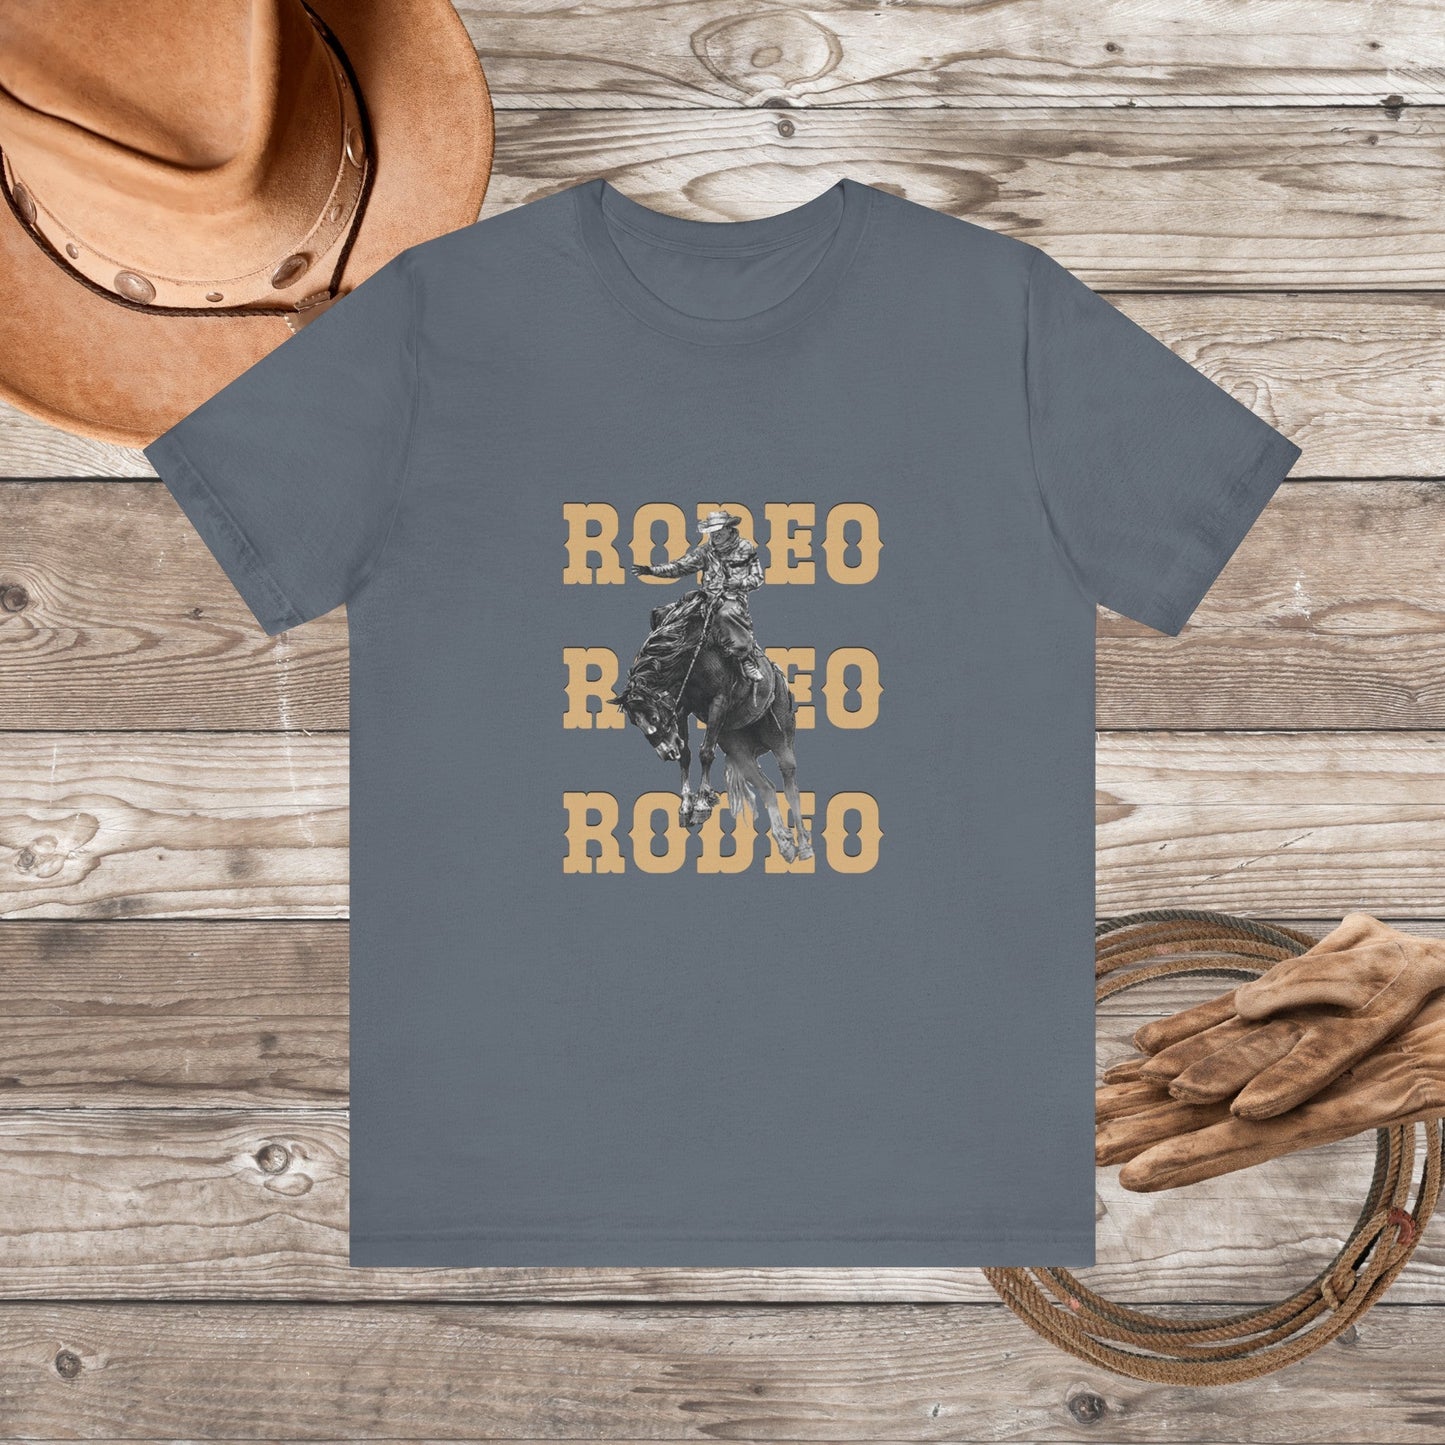 Vintage Rodeo Bronc Rider Shirt, Western Cowboy Shirt, Wild West Shirt - FlooredByArt